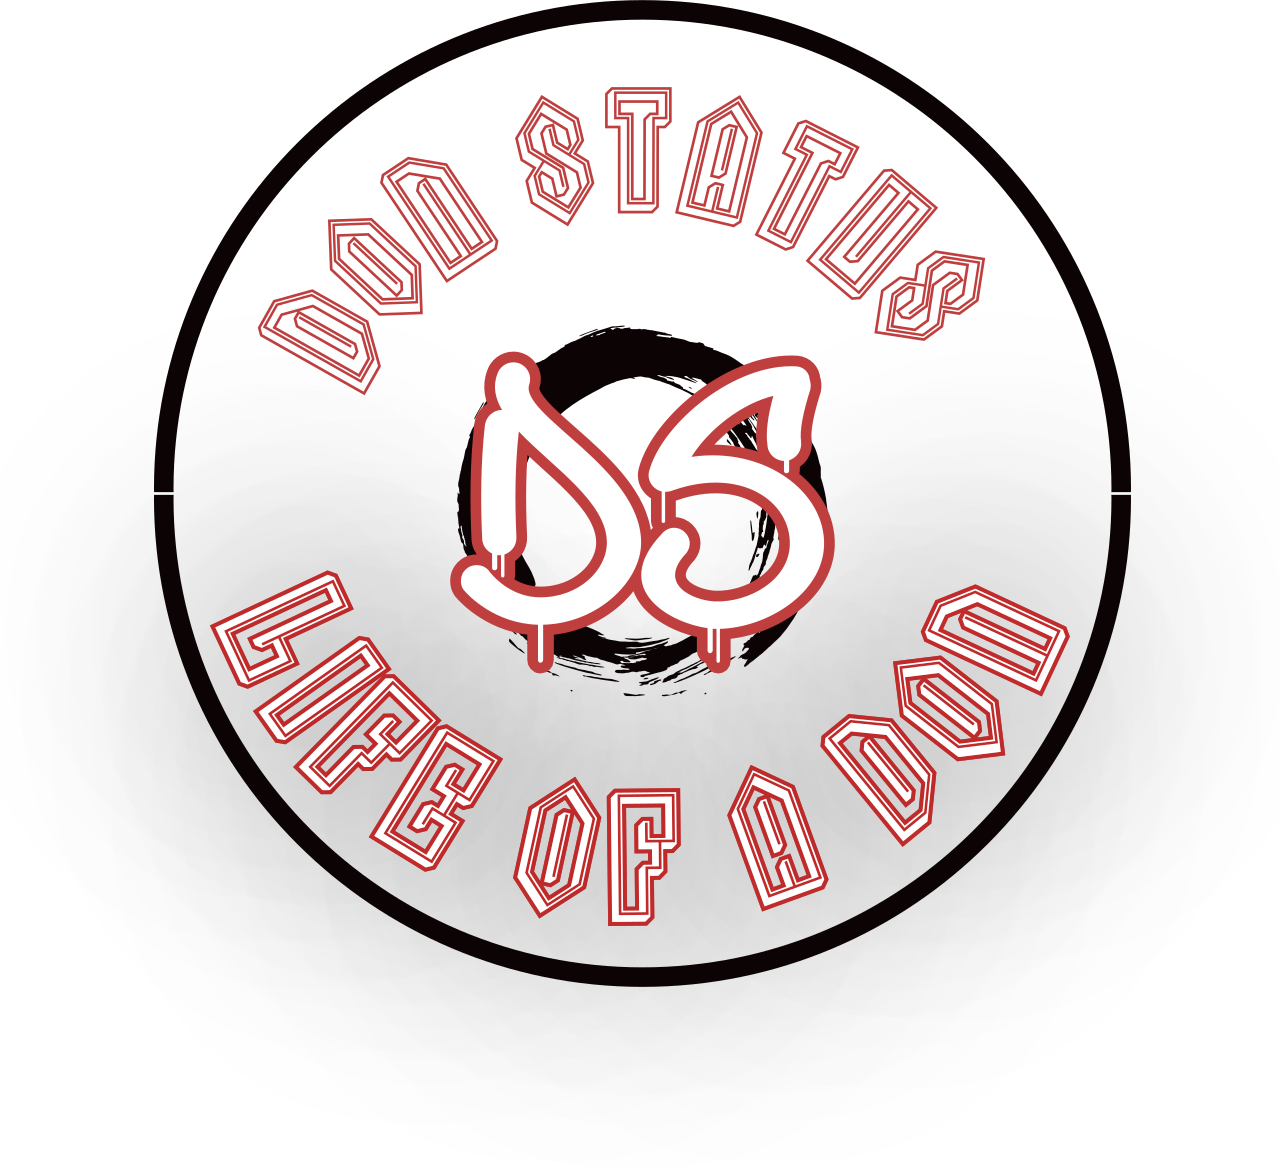 Don Status 's web page